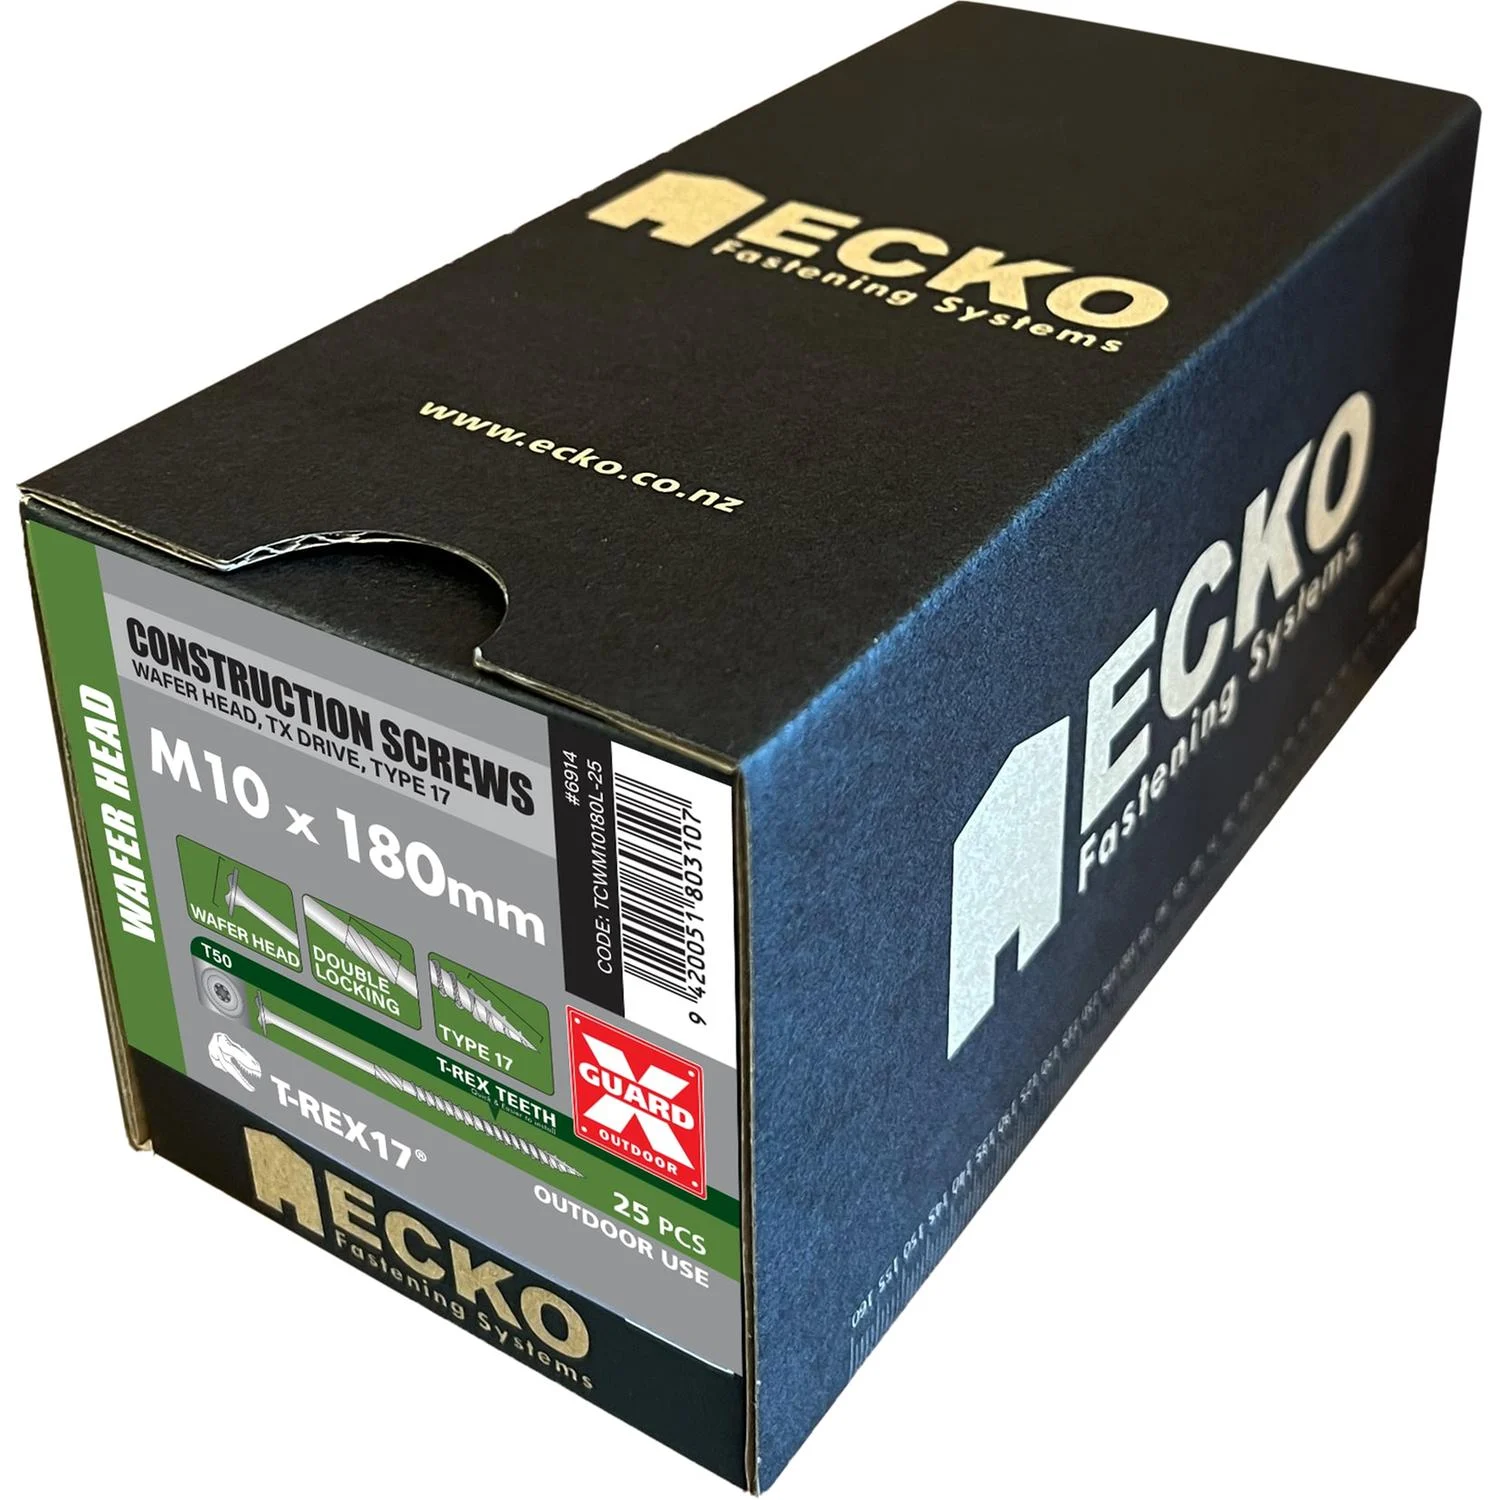 Ecko T-Rex17 Construction Screws M10 X 180Mm (500 Pack)